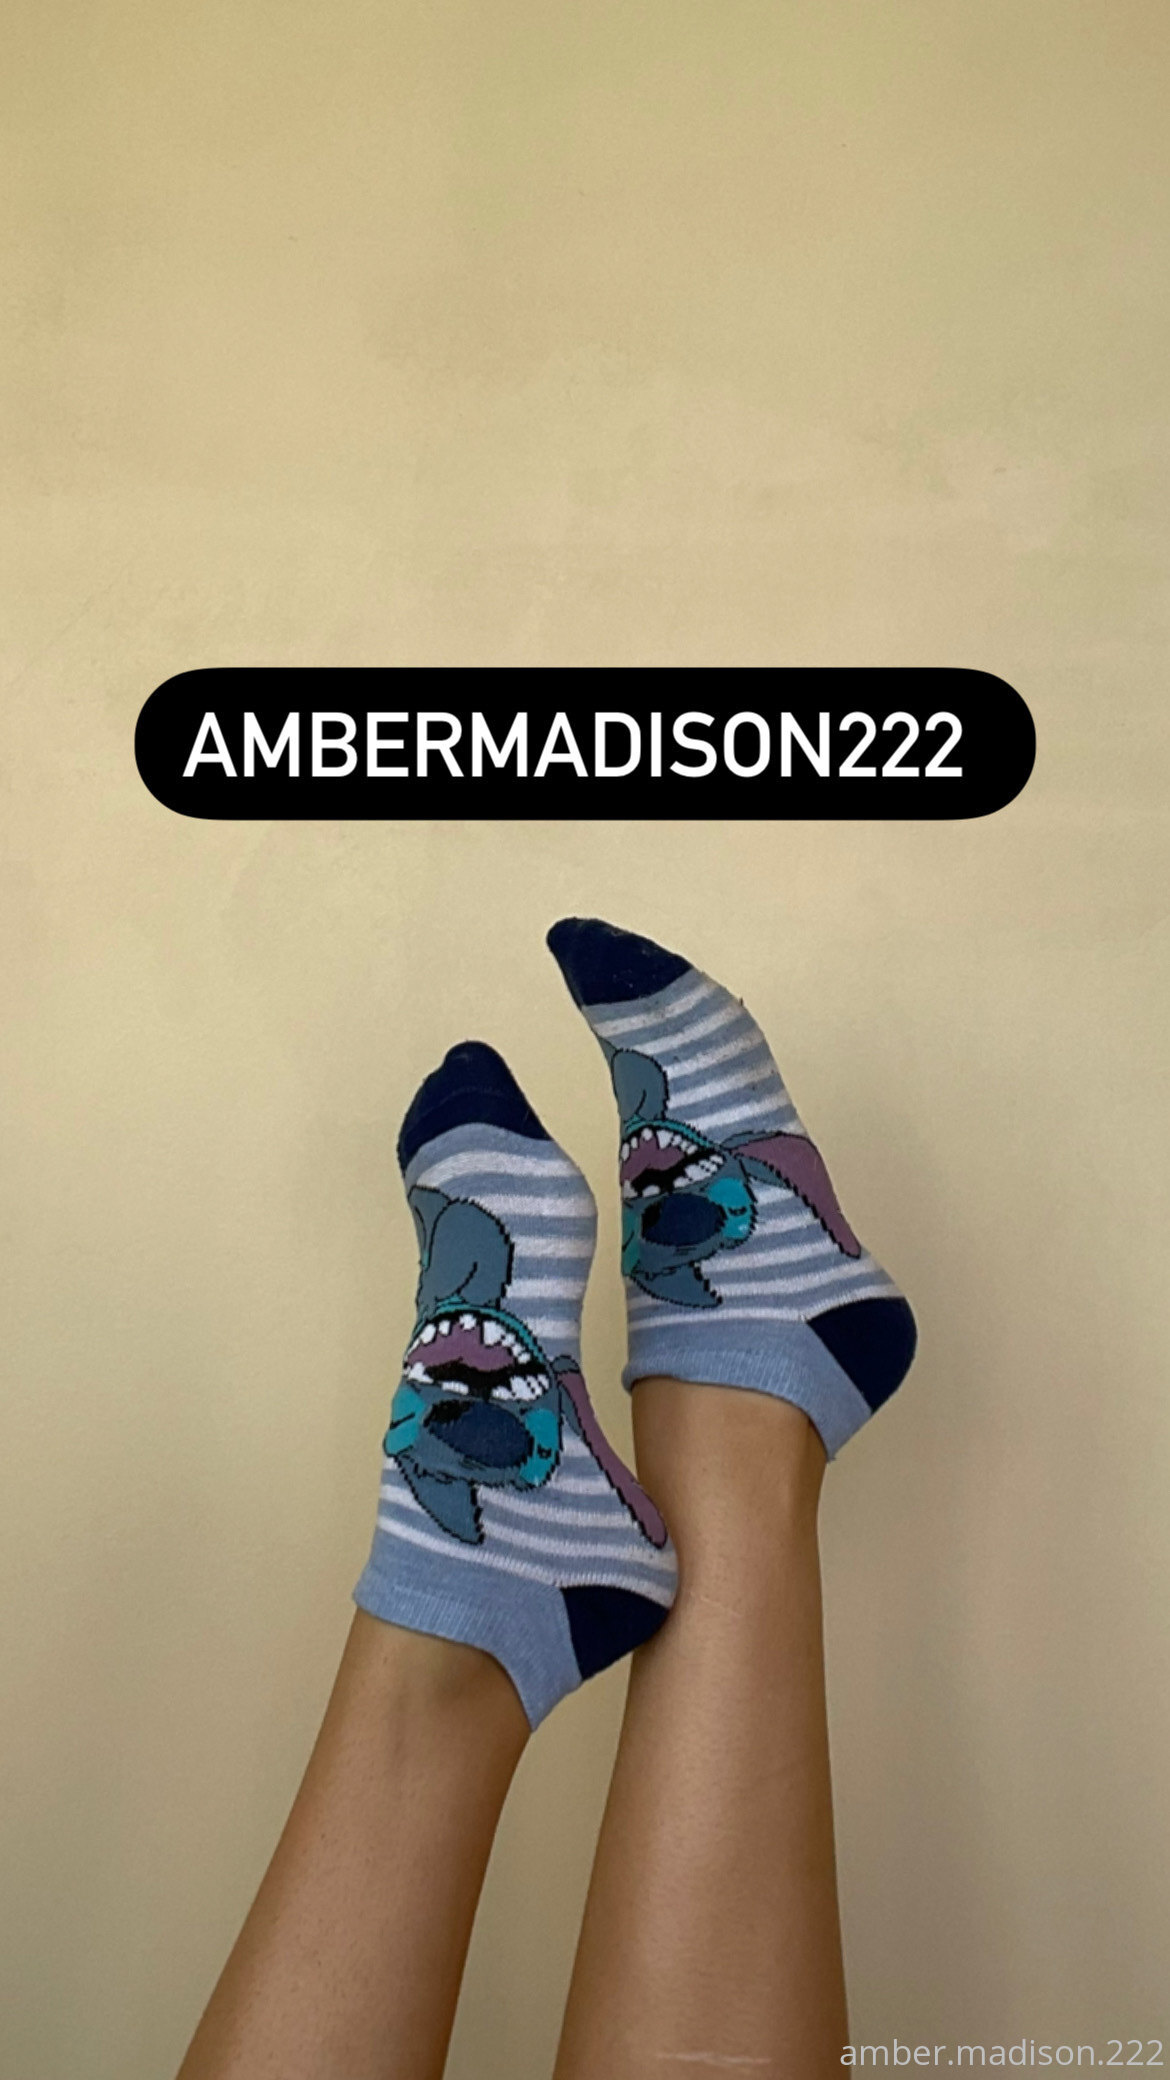 Amber madison 222